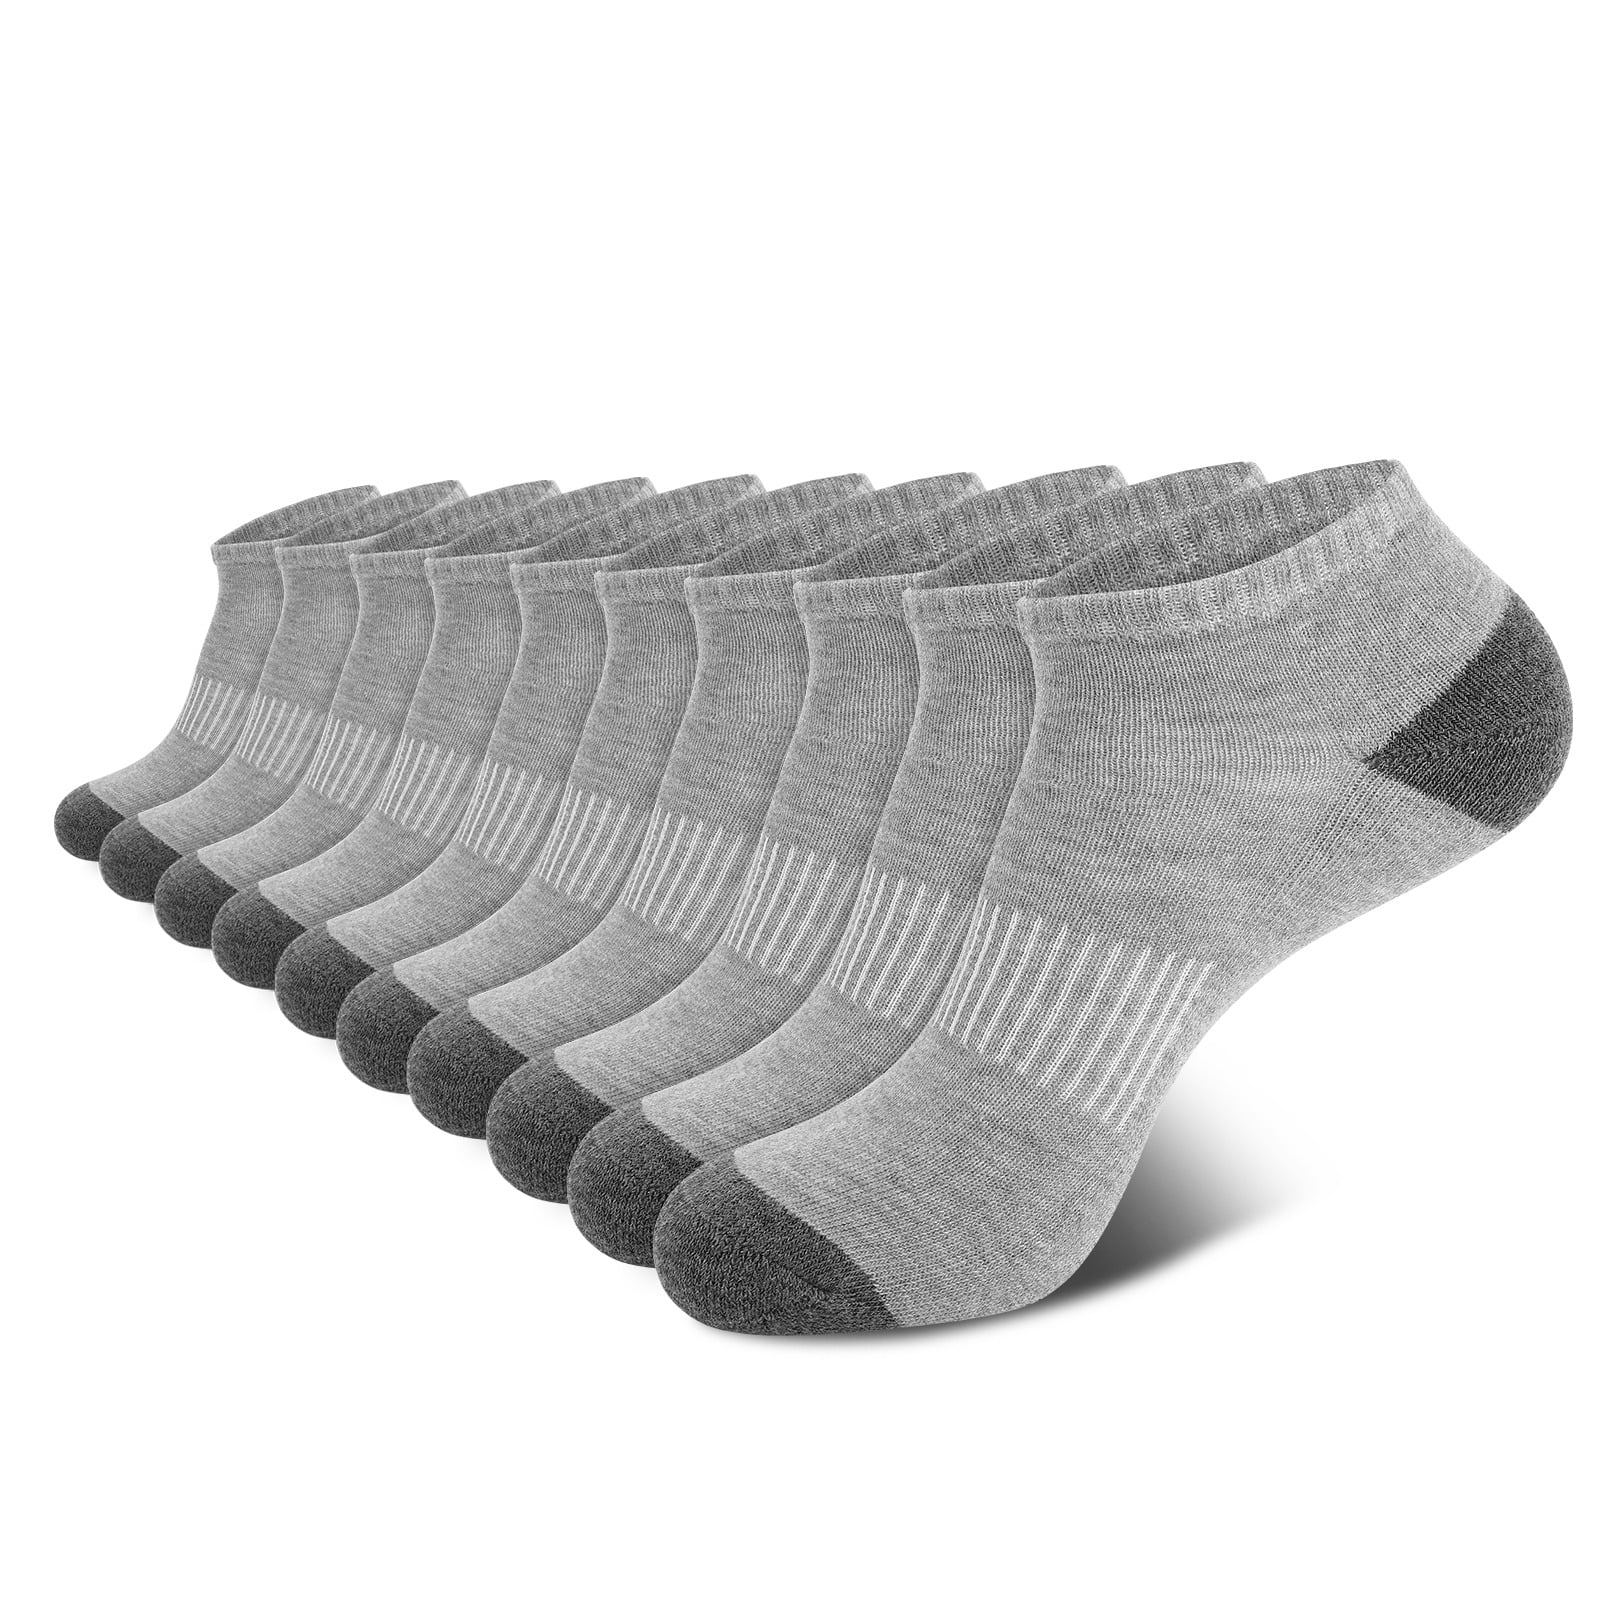 COOPLUS Mens Socks 10 Pairs Ankle Low Cut Socks for Men Breathable ...